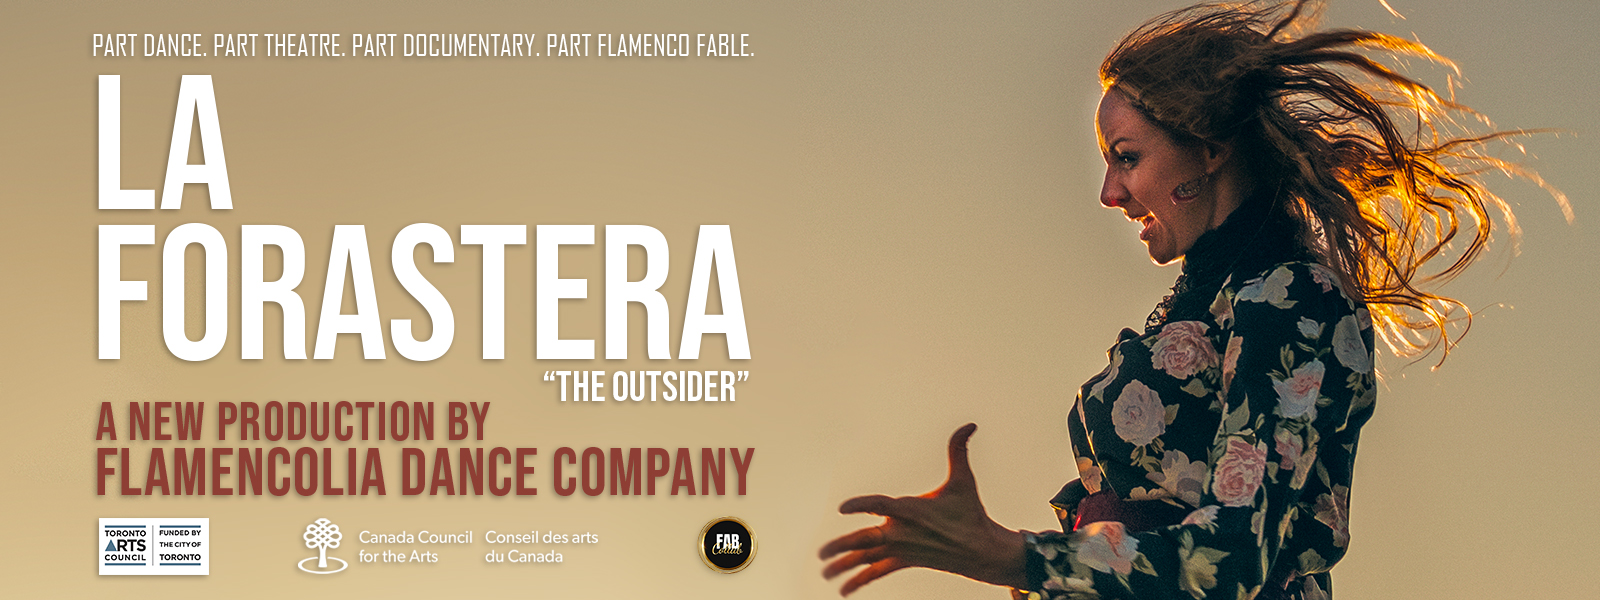 La Forastera (The Outsider) show poster